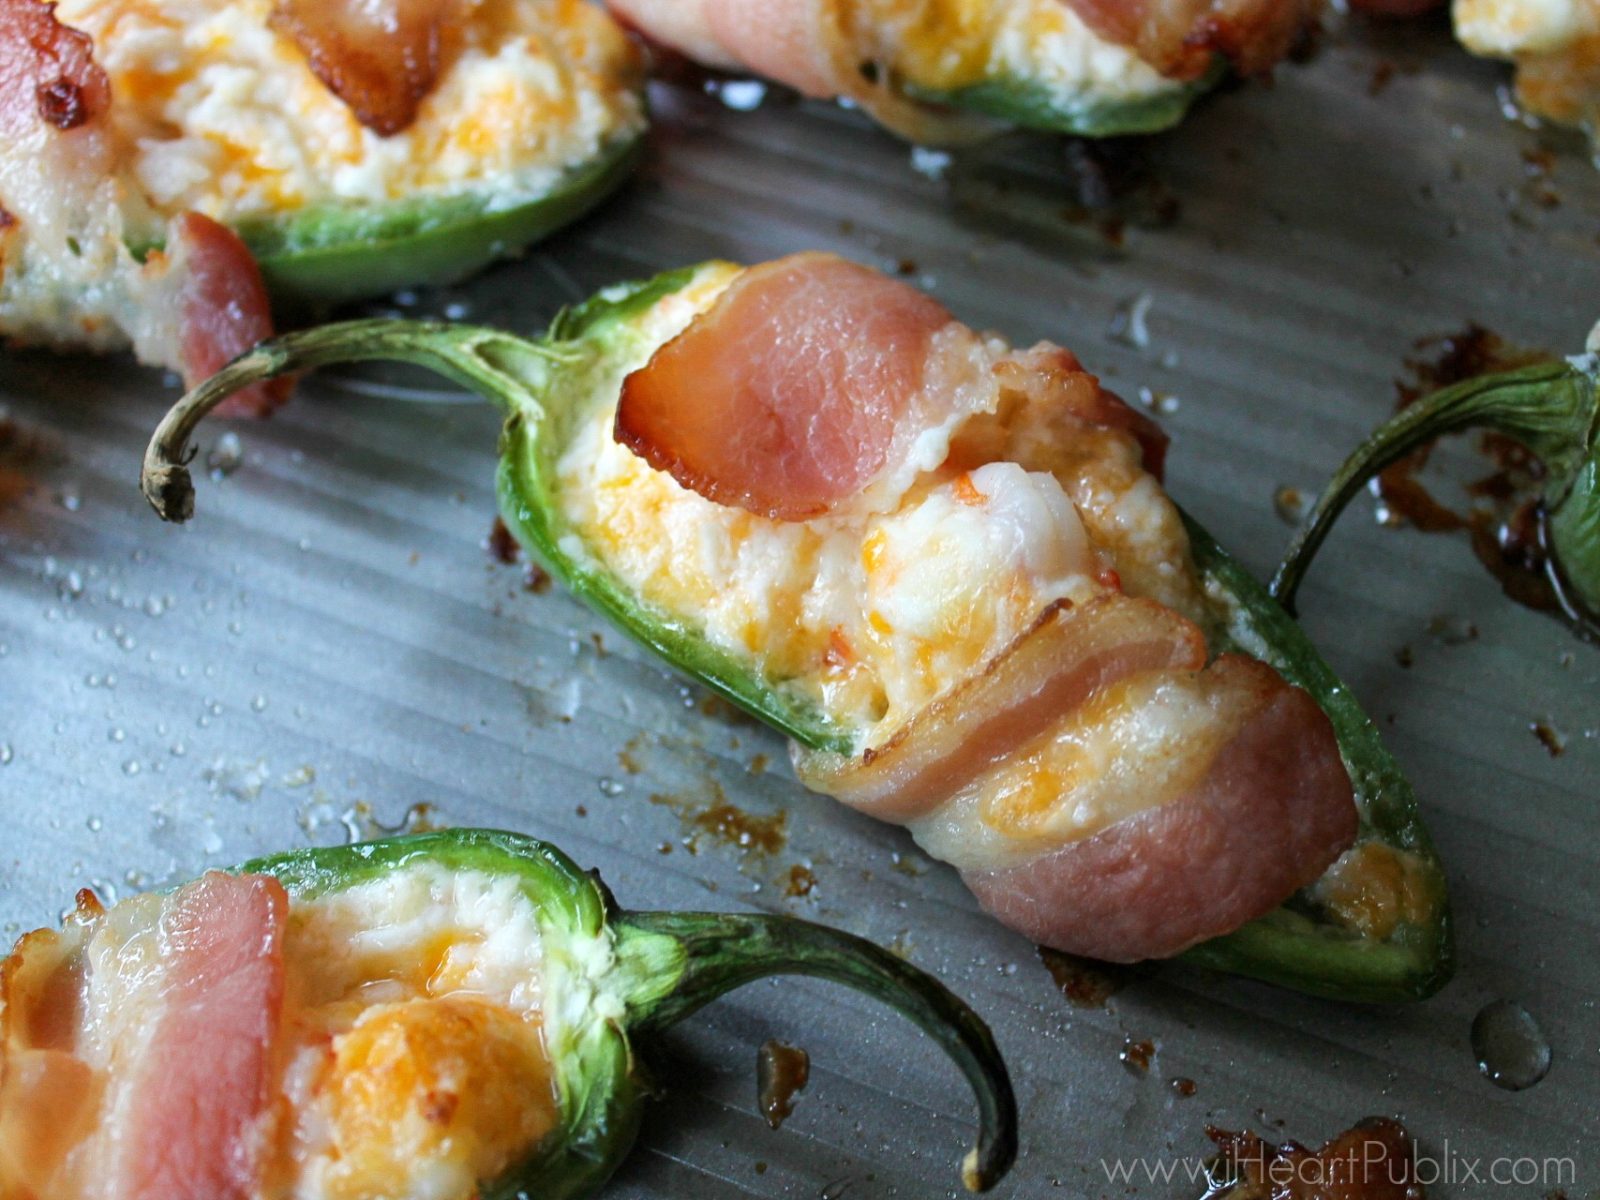 Bacon Wrapped Shrimp-Stuffed Jalapeño Poppers – Fantastic Game Day Recipe For The Smithfield Bacon BOGO Sale